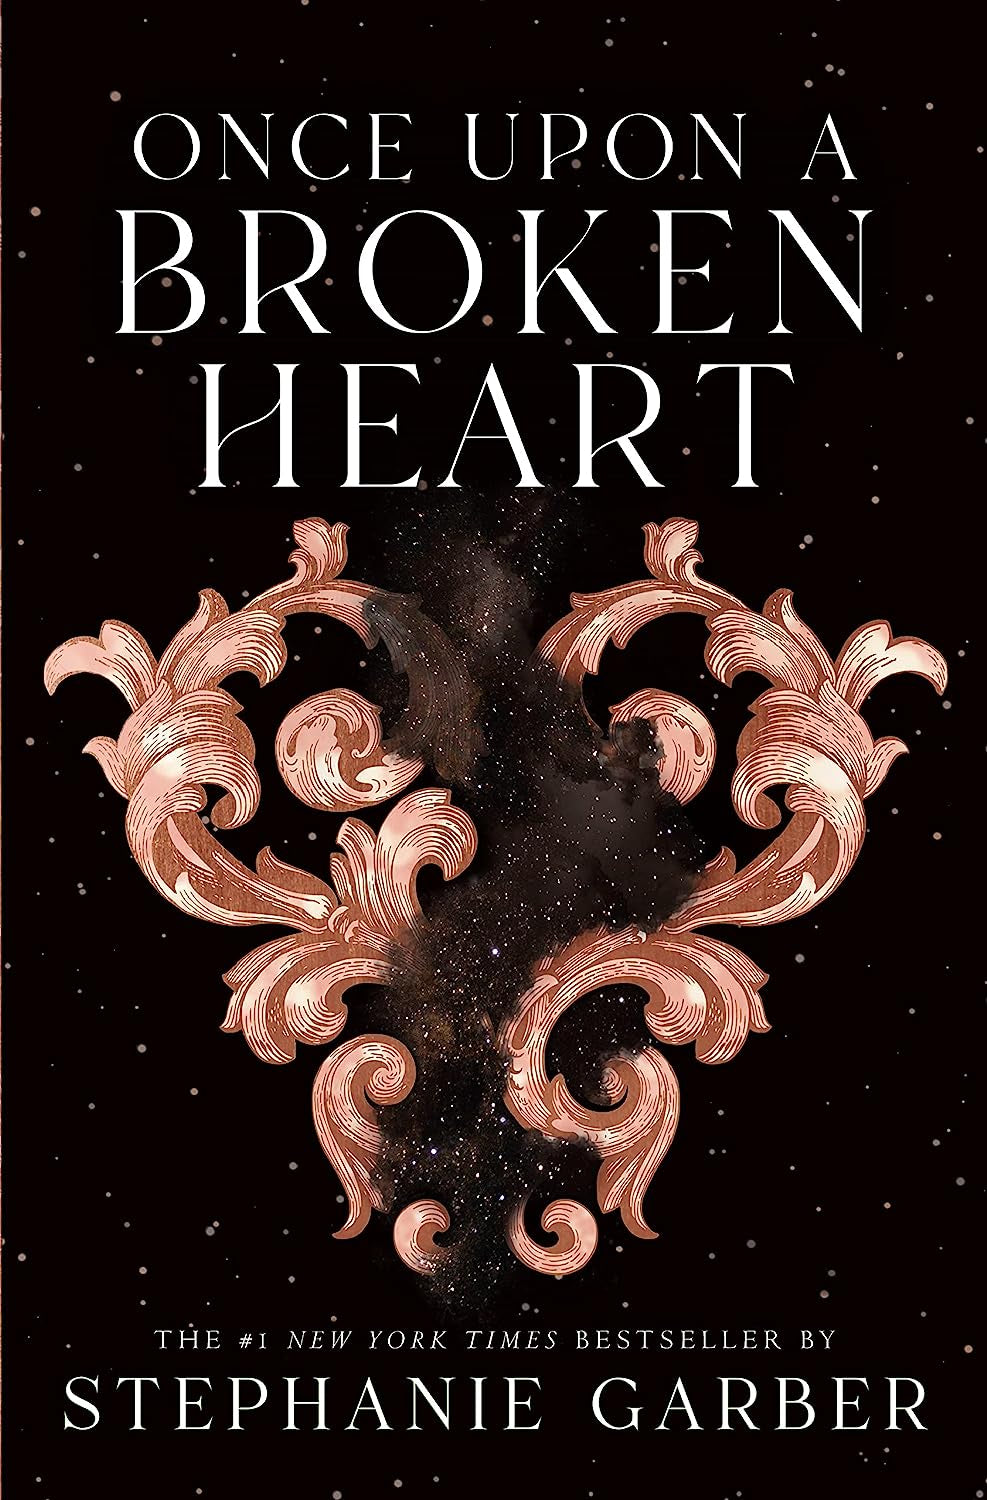 Once upon a Broken Heart - Stephanie Garber - Paperback